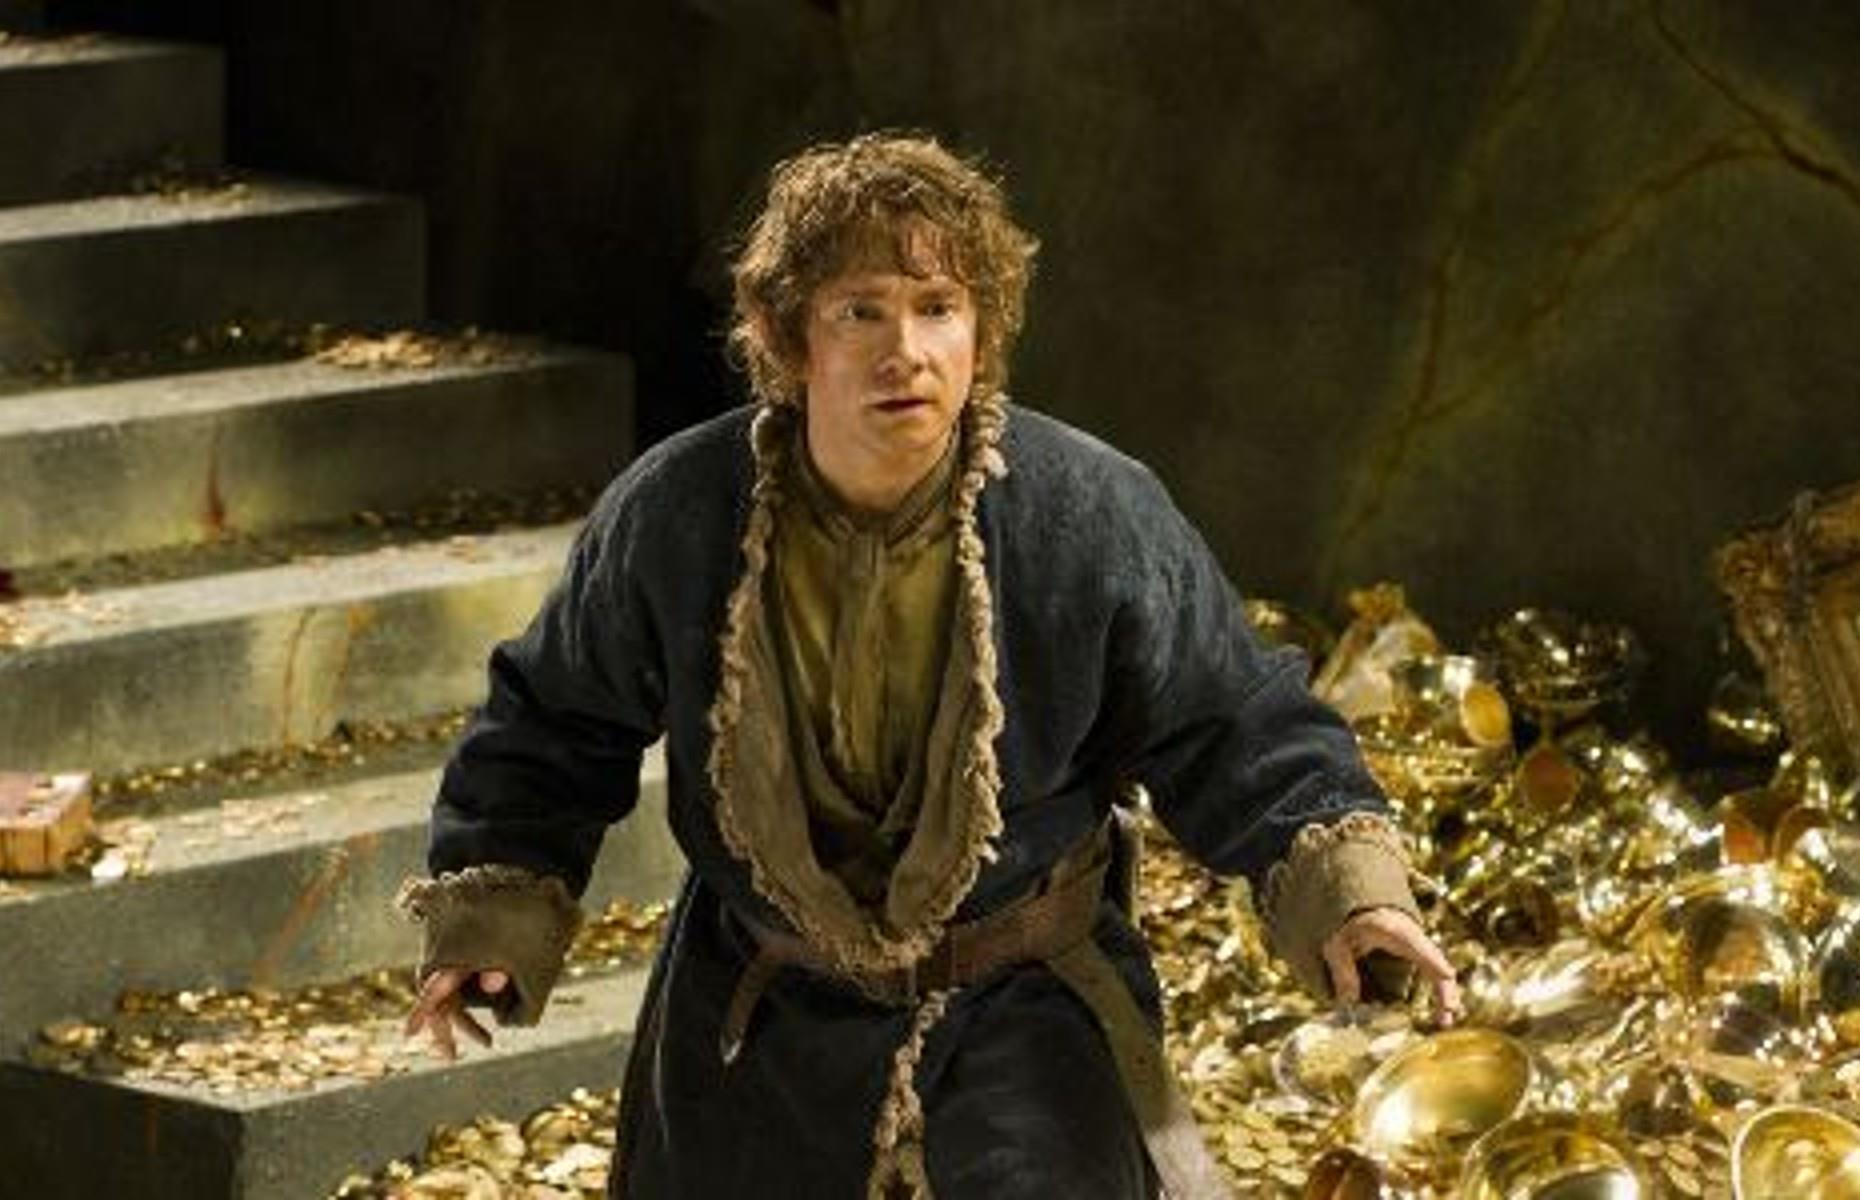 The Hobbit: The Desolation of Smaug (2013) – cost: $225 million (£139.2m); profit: $734 million (£454m)